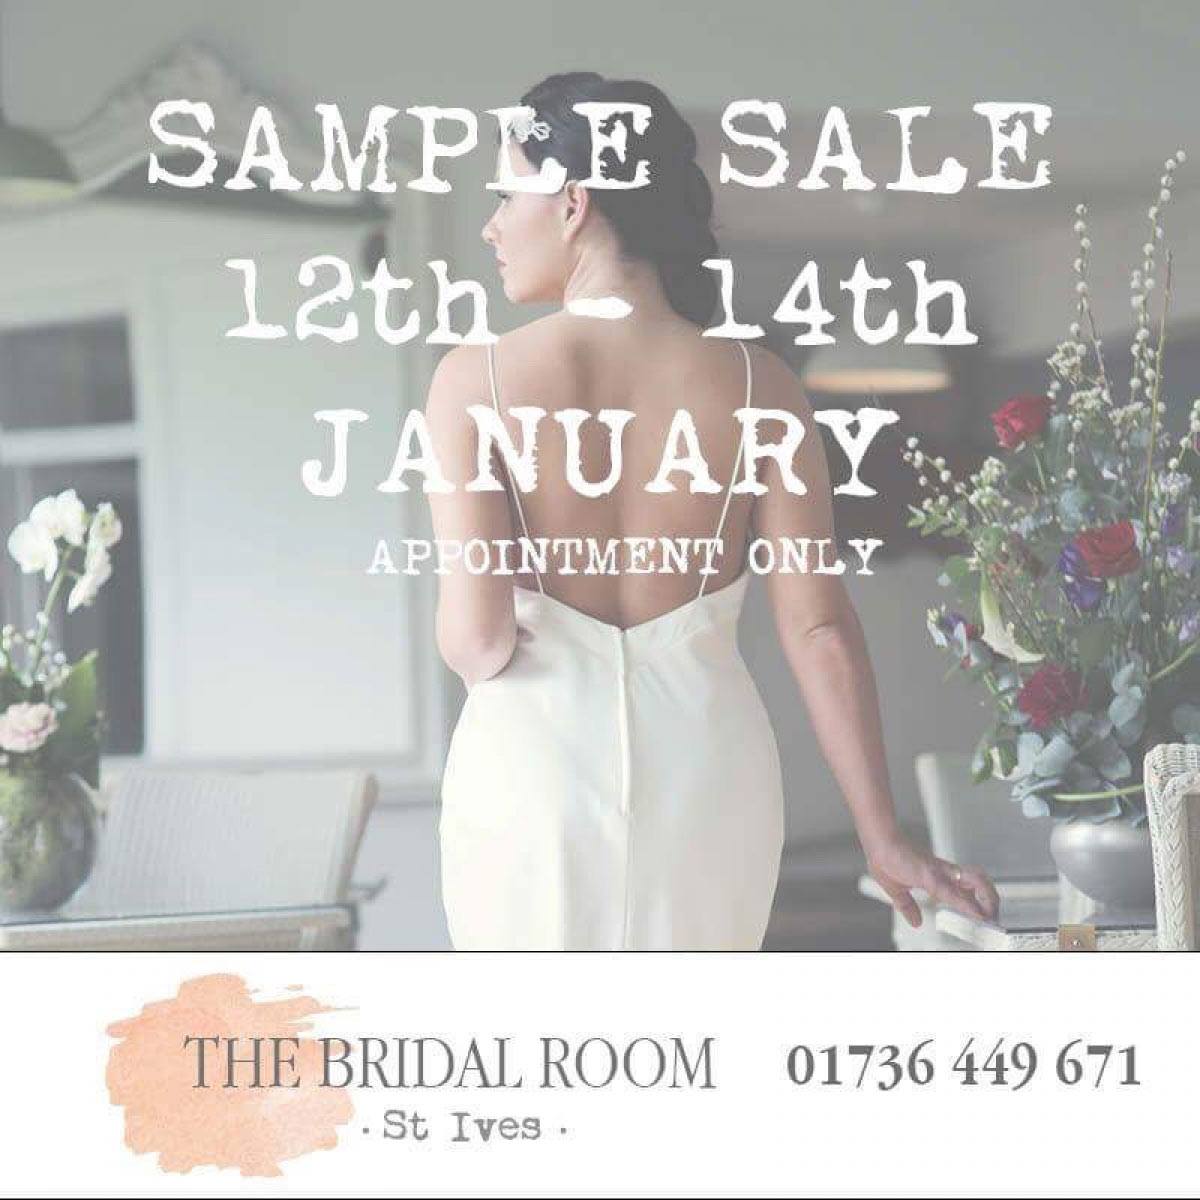 Sample sale at The Bridal Room St Ives